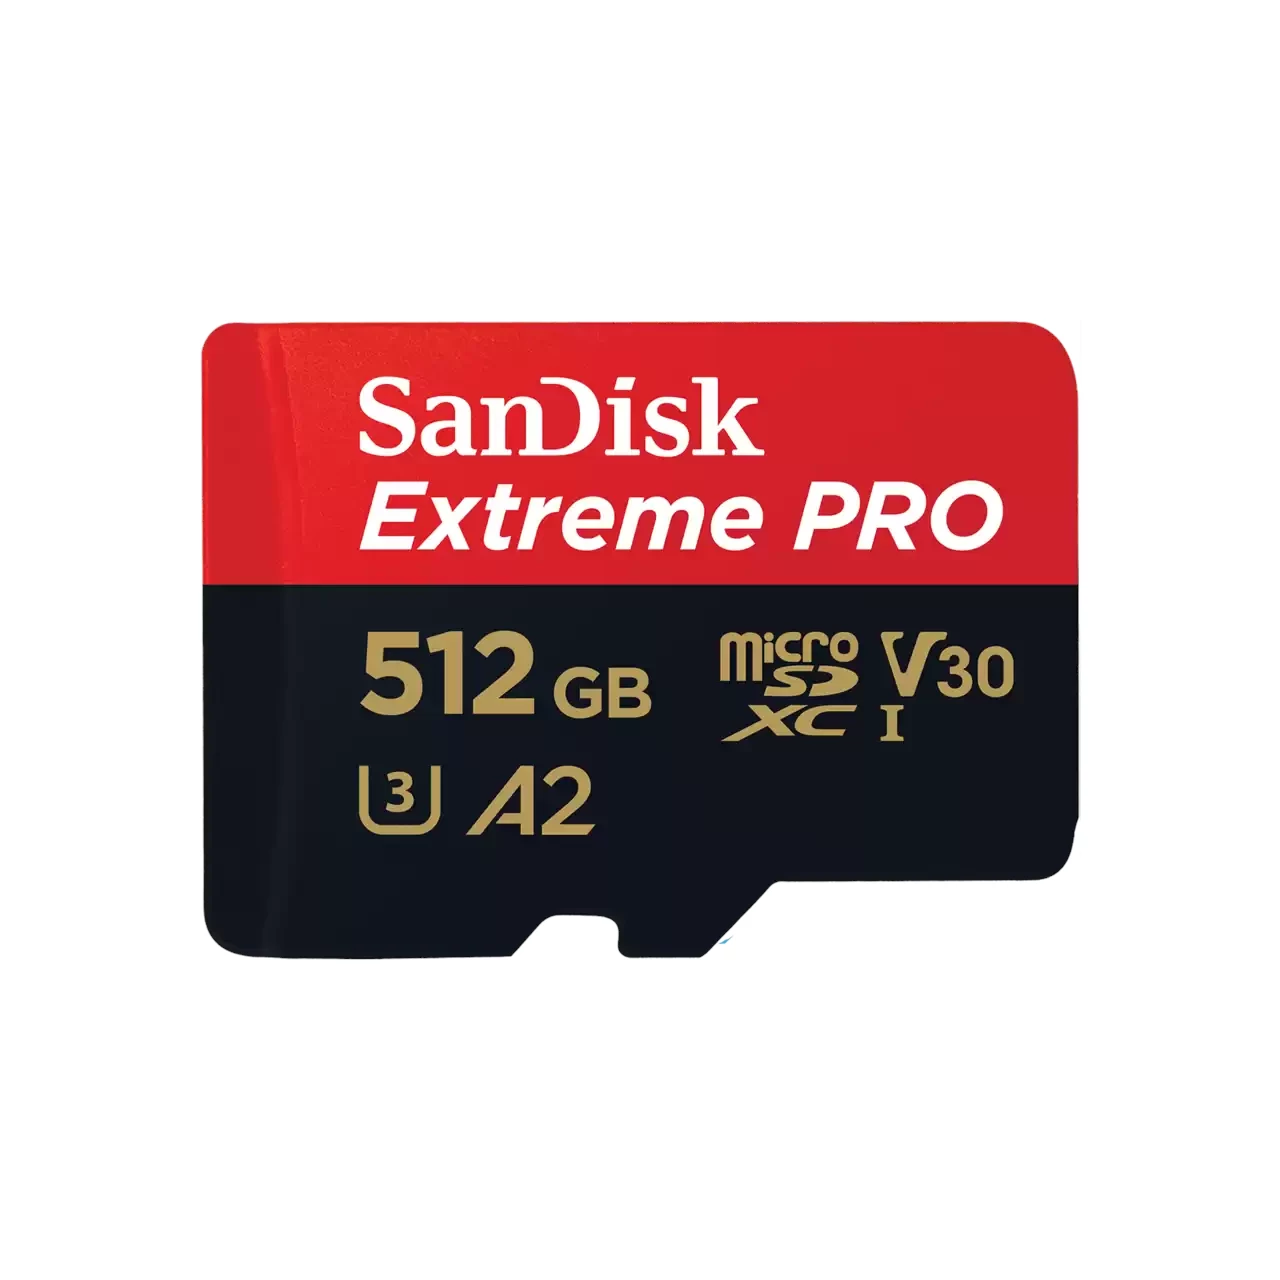 Sandisk Extreme Pro 512Gb MicroSDXC UHS-I Card #SDSQXCD-512G